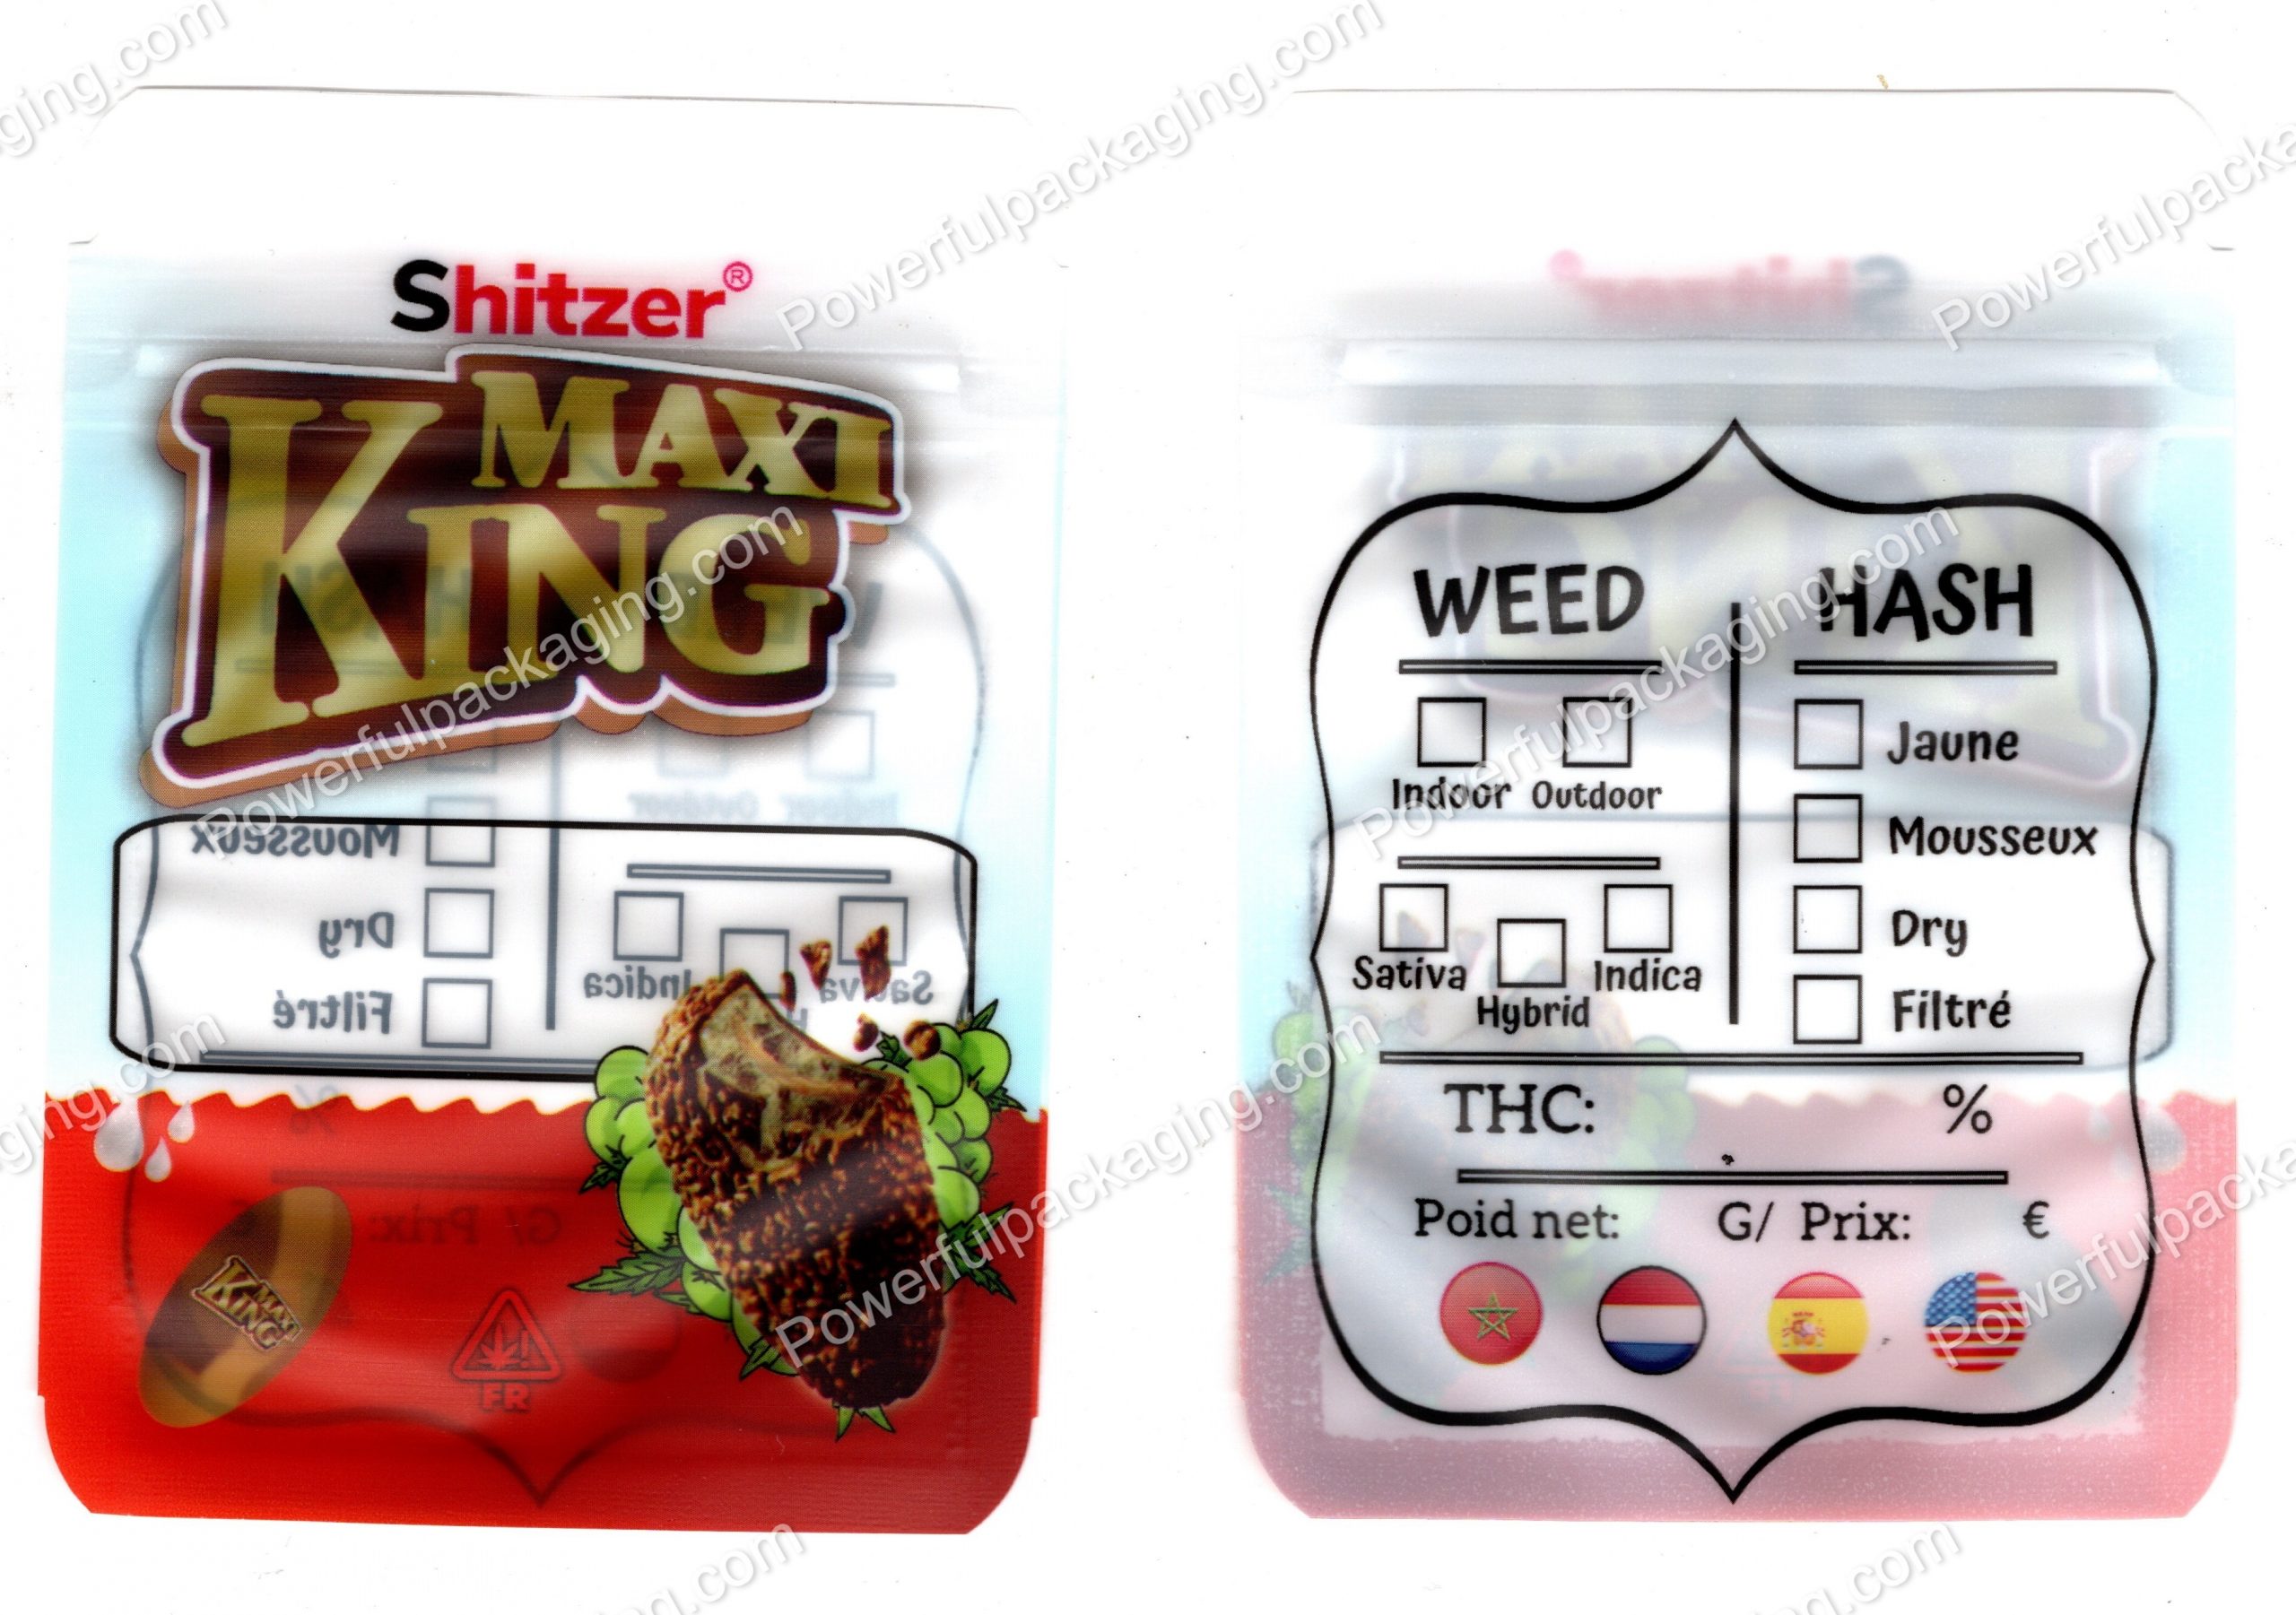 Shitzer : Maxi King Mini (Flower / Concentrate) Multipurpose